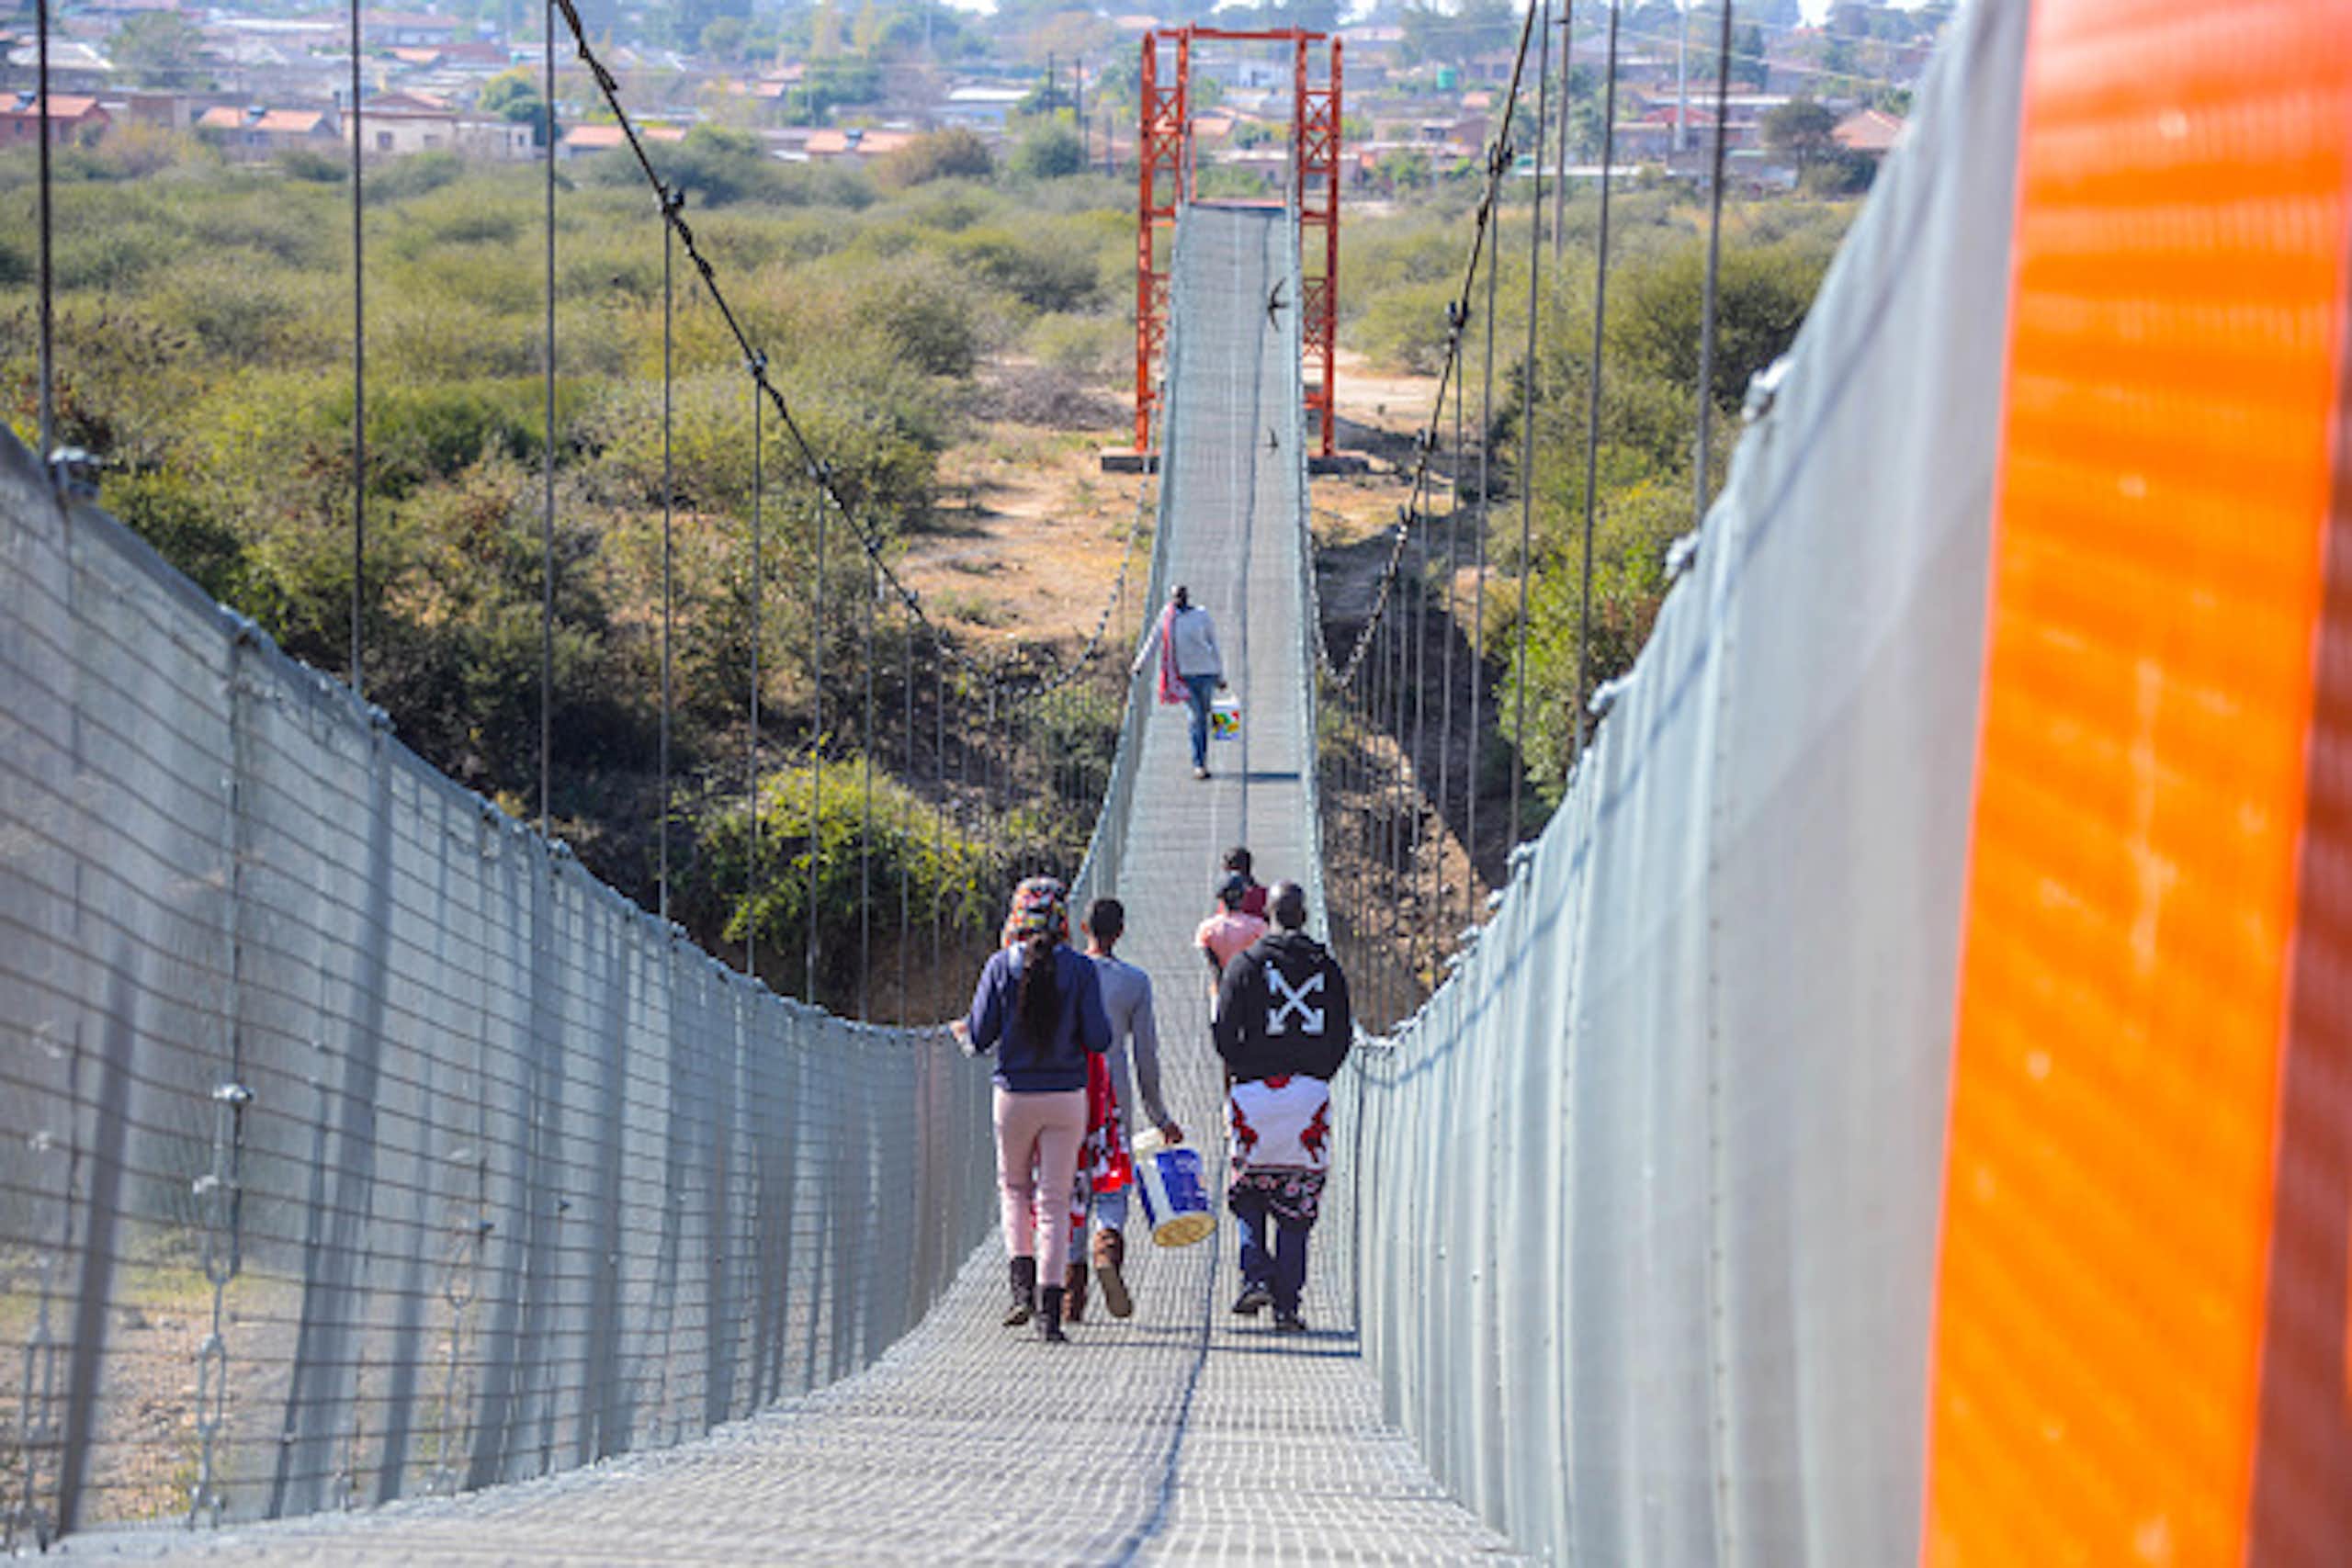 People walking across a suspension bridge